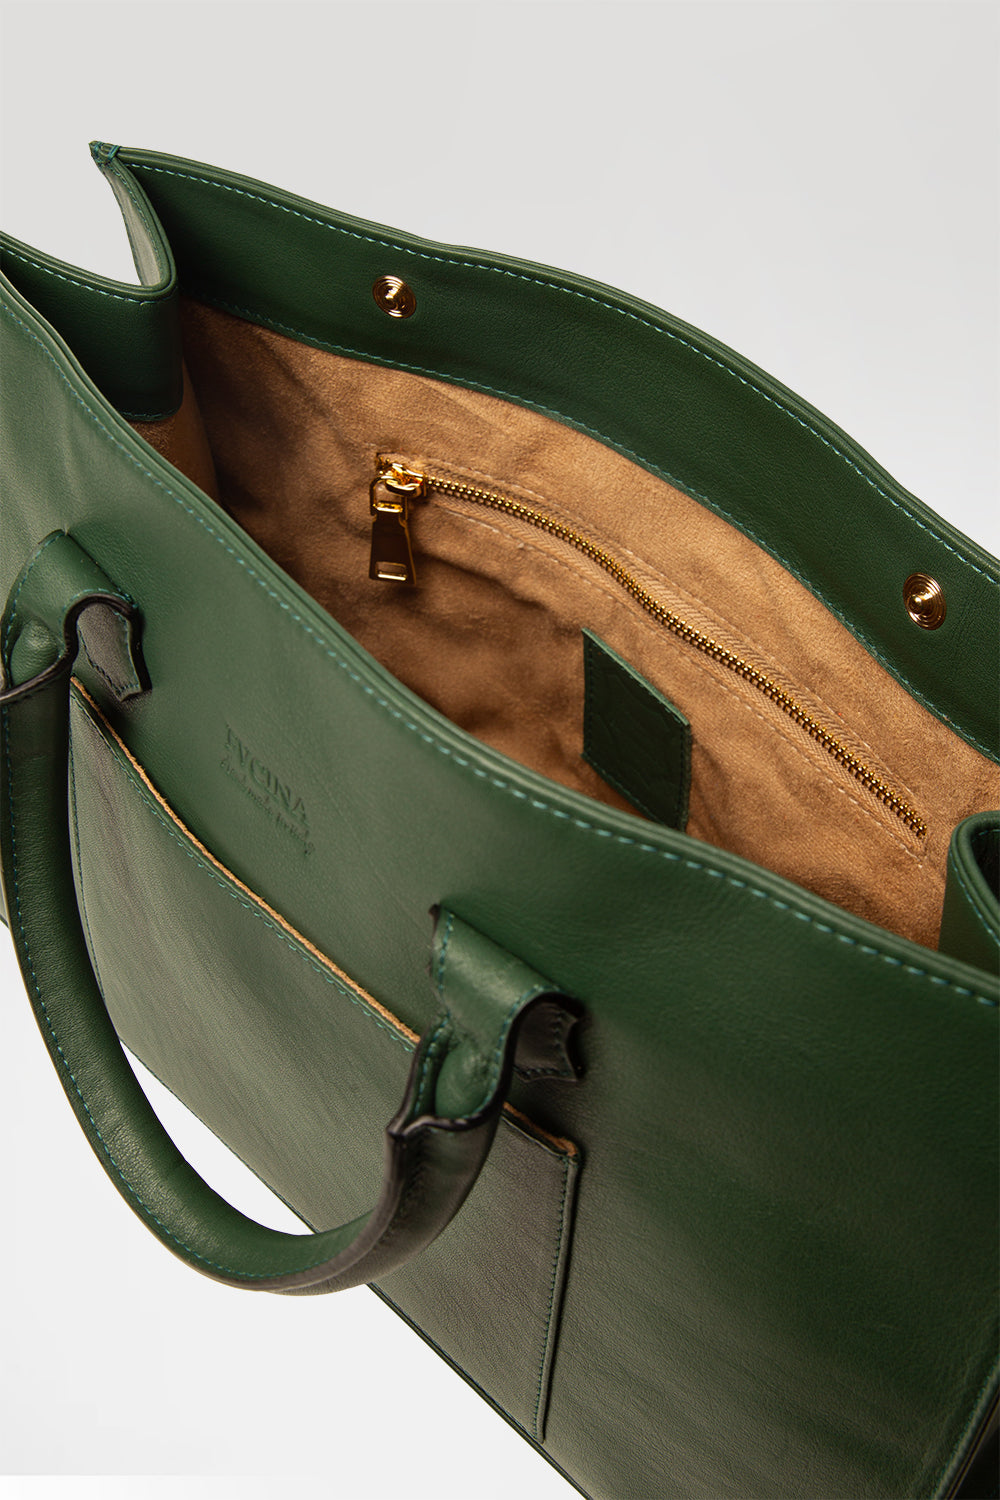 genuine italian leather handbags, handmade in italy, luxury leather handbags, natural leather handbags, italian artisans leather handbags